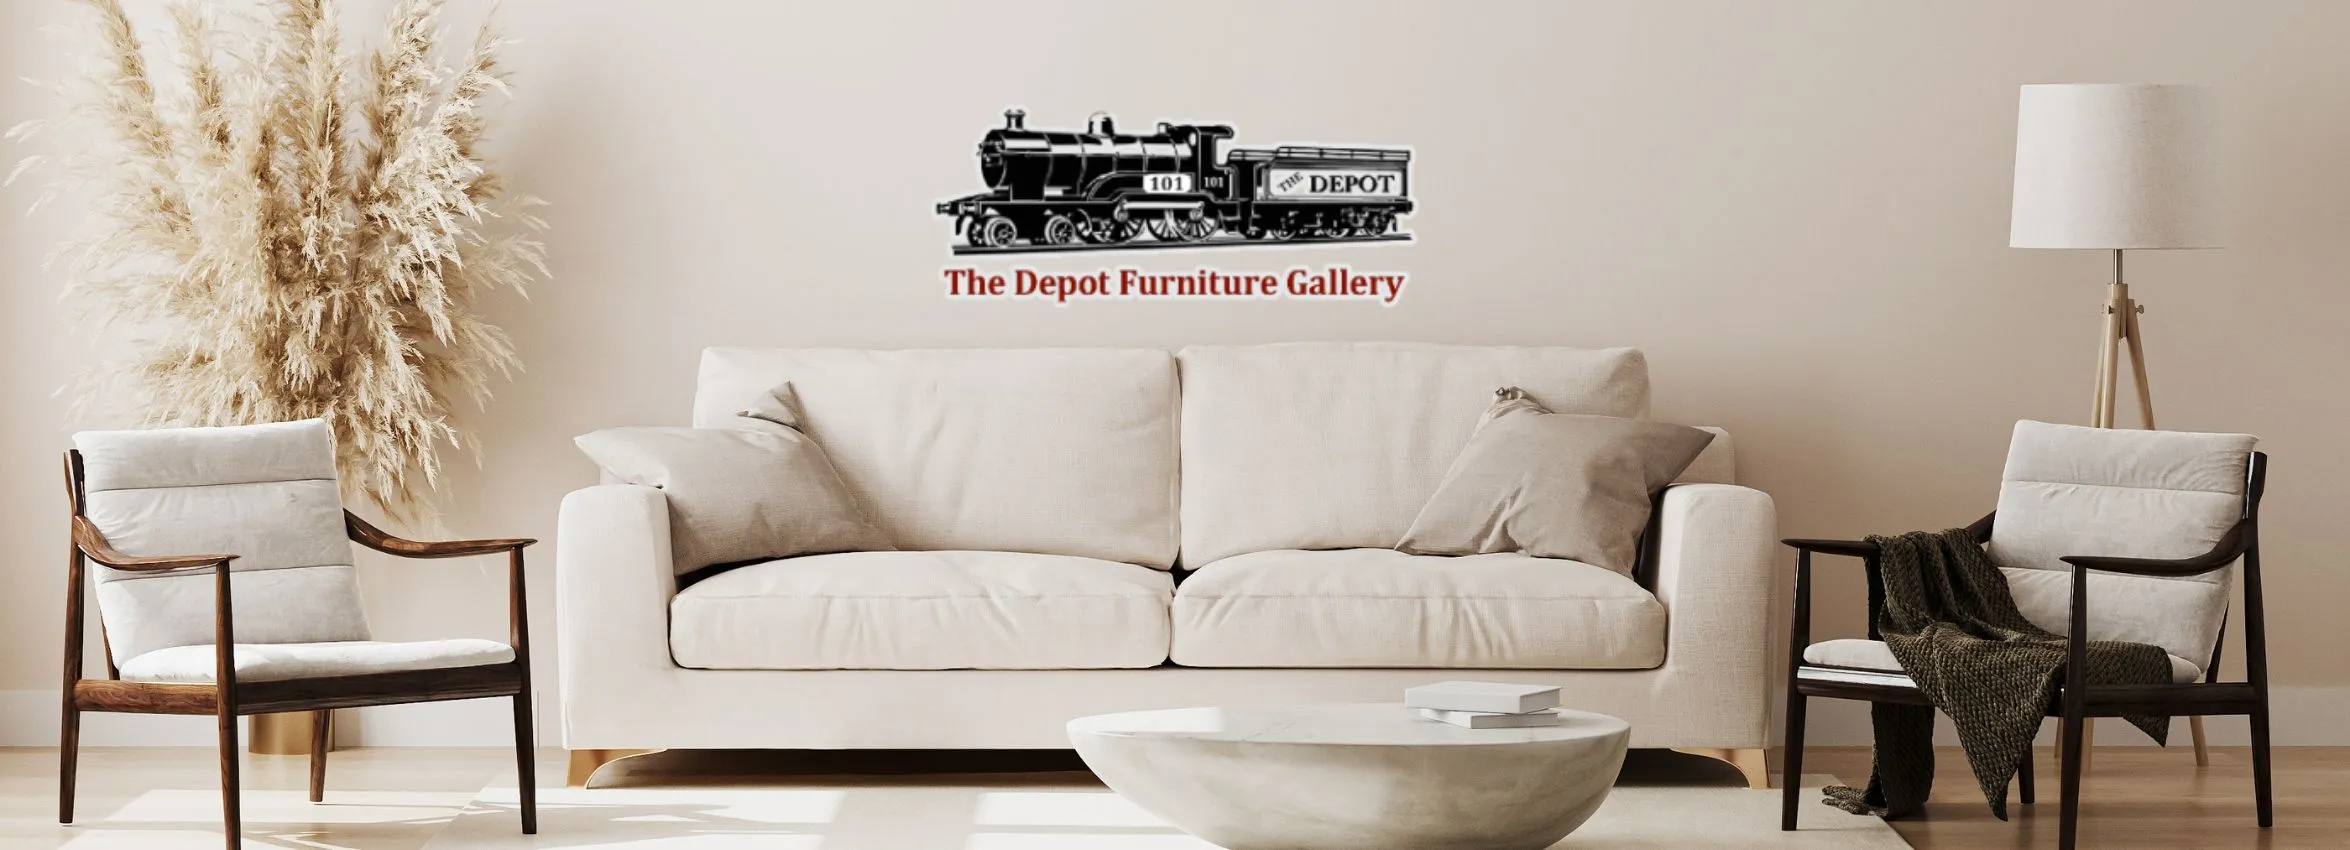 The-Depot-Furniture-Gallery_Desktop_ET